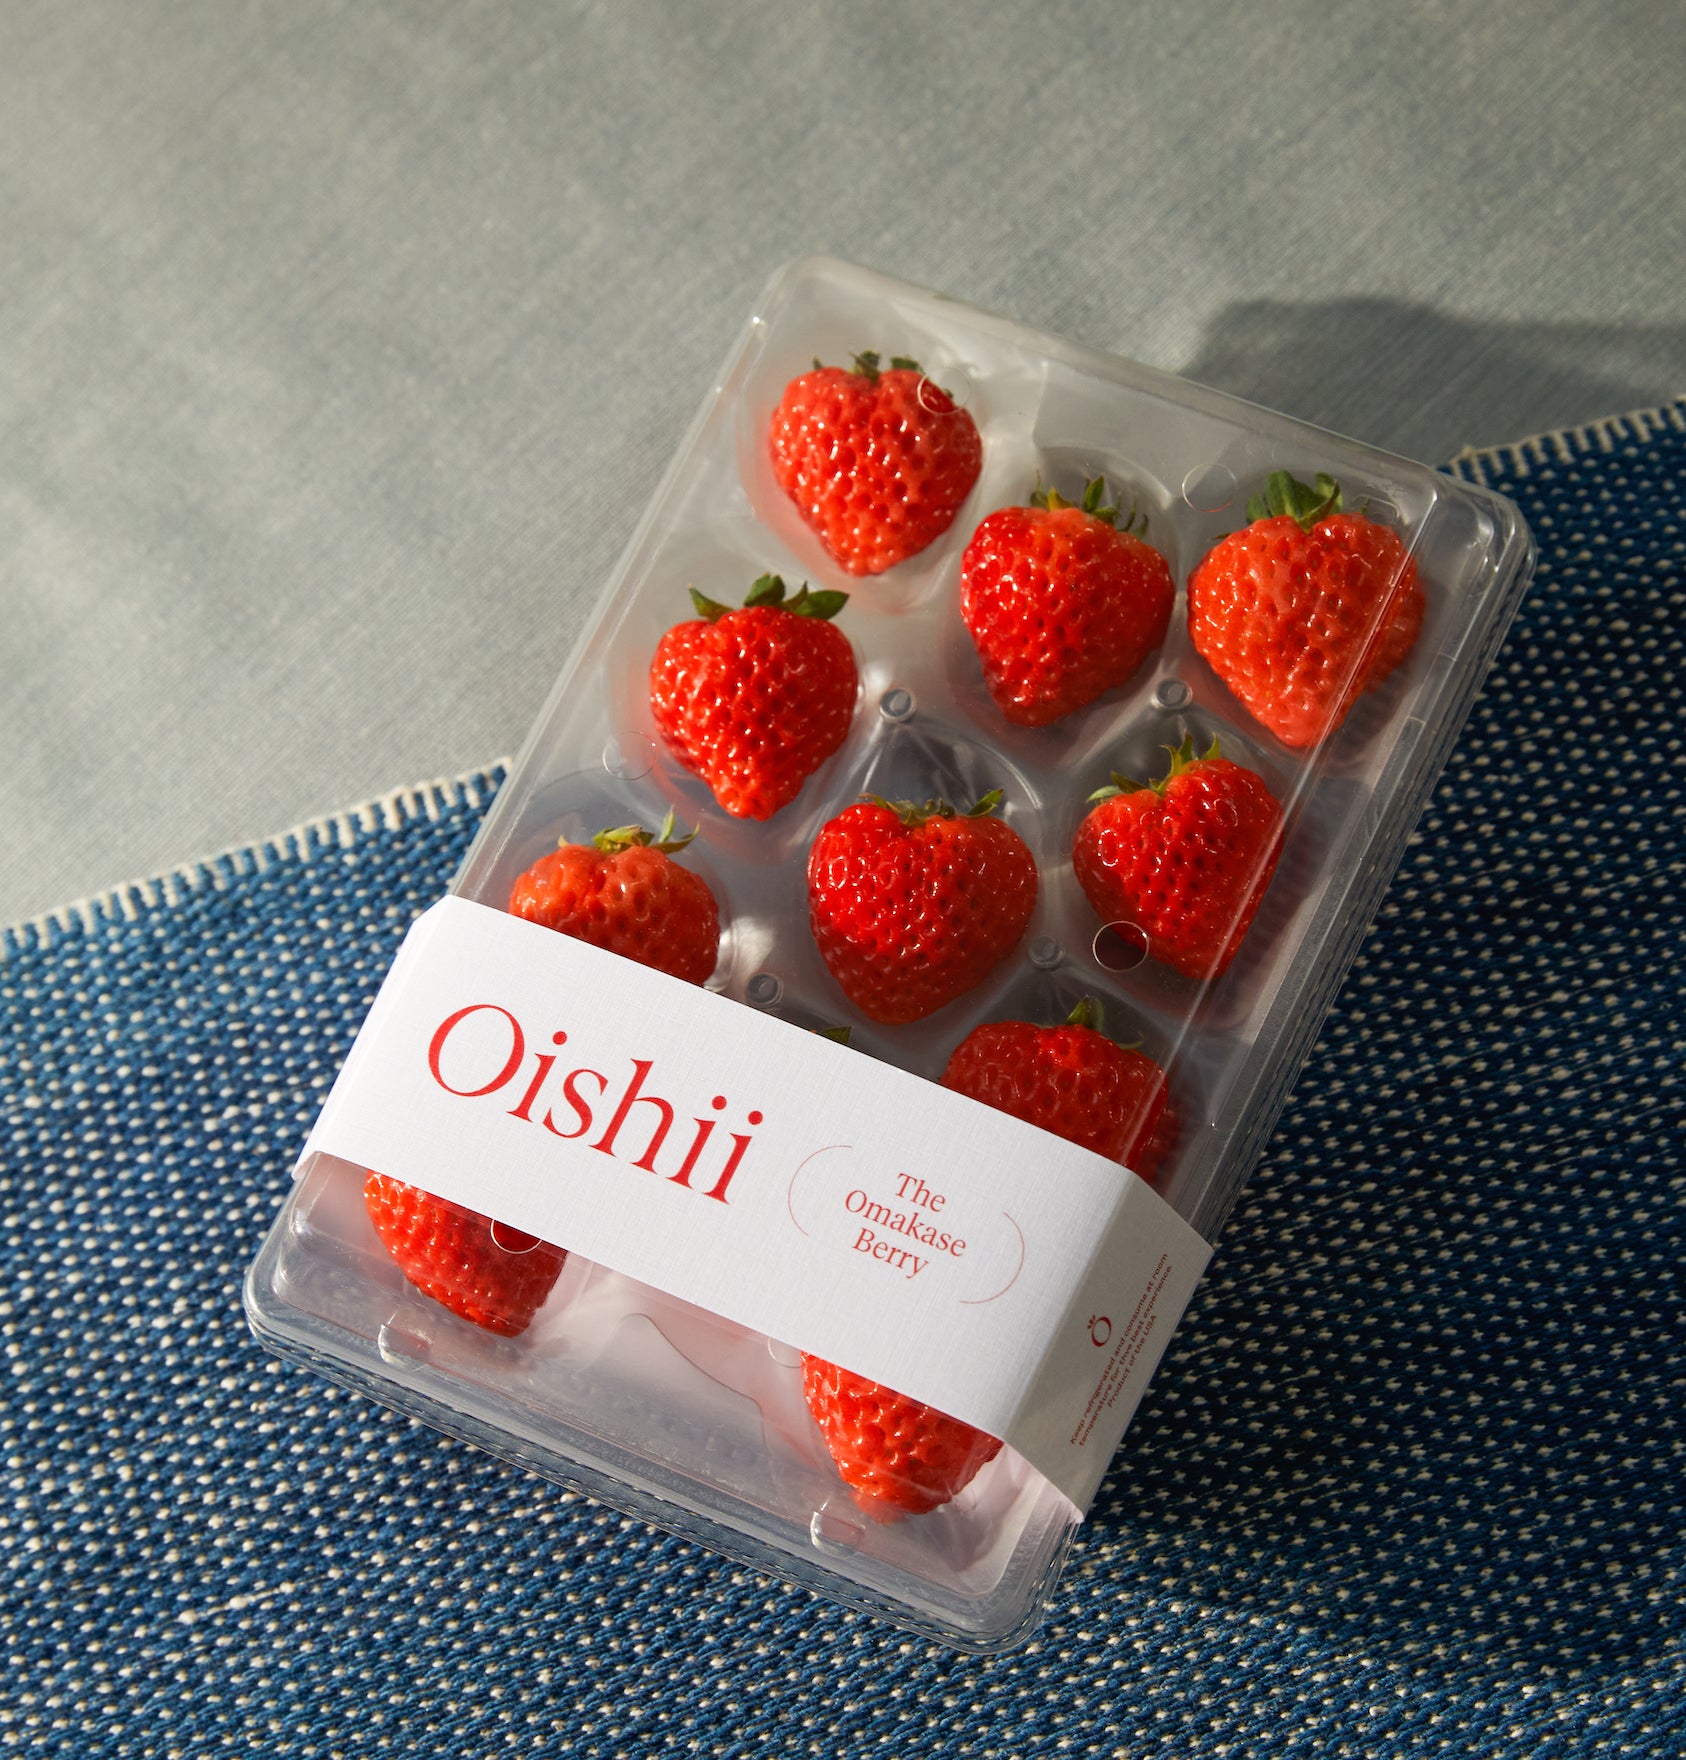 Premium strawberries